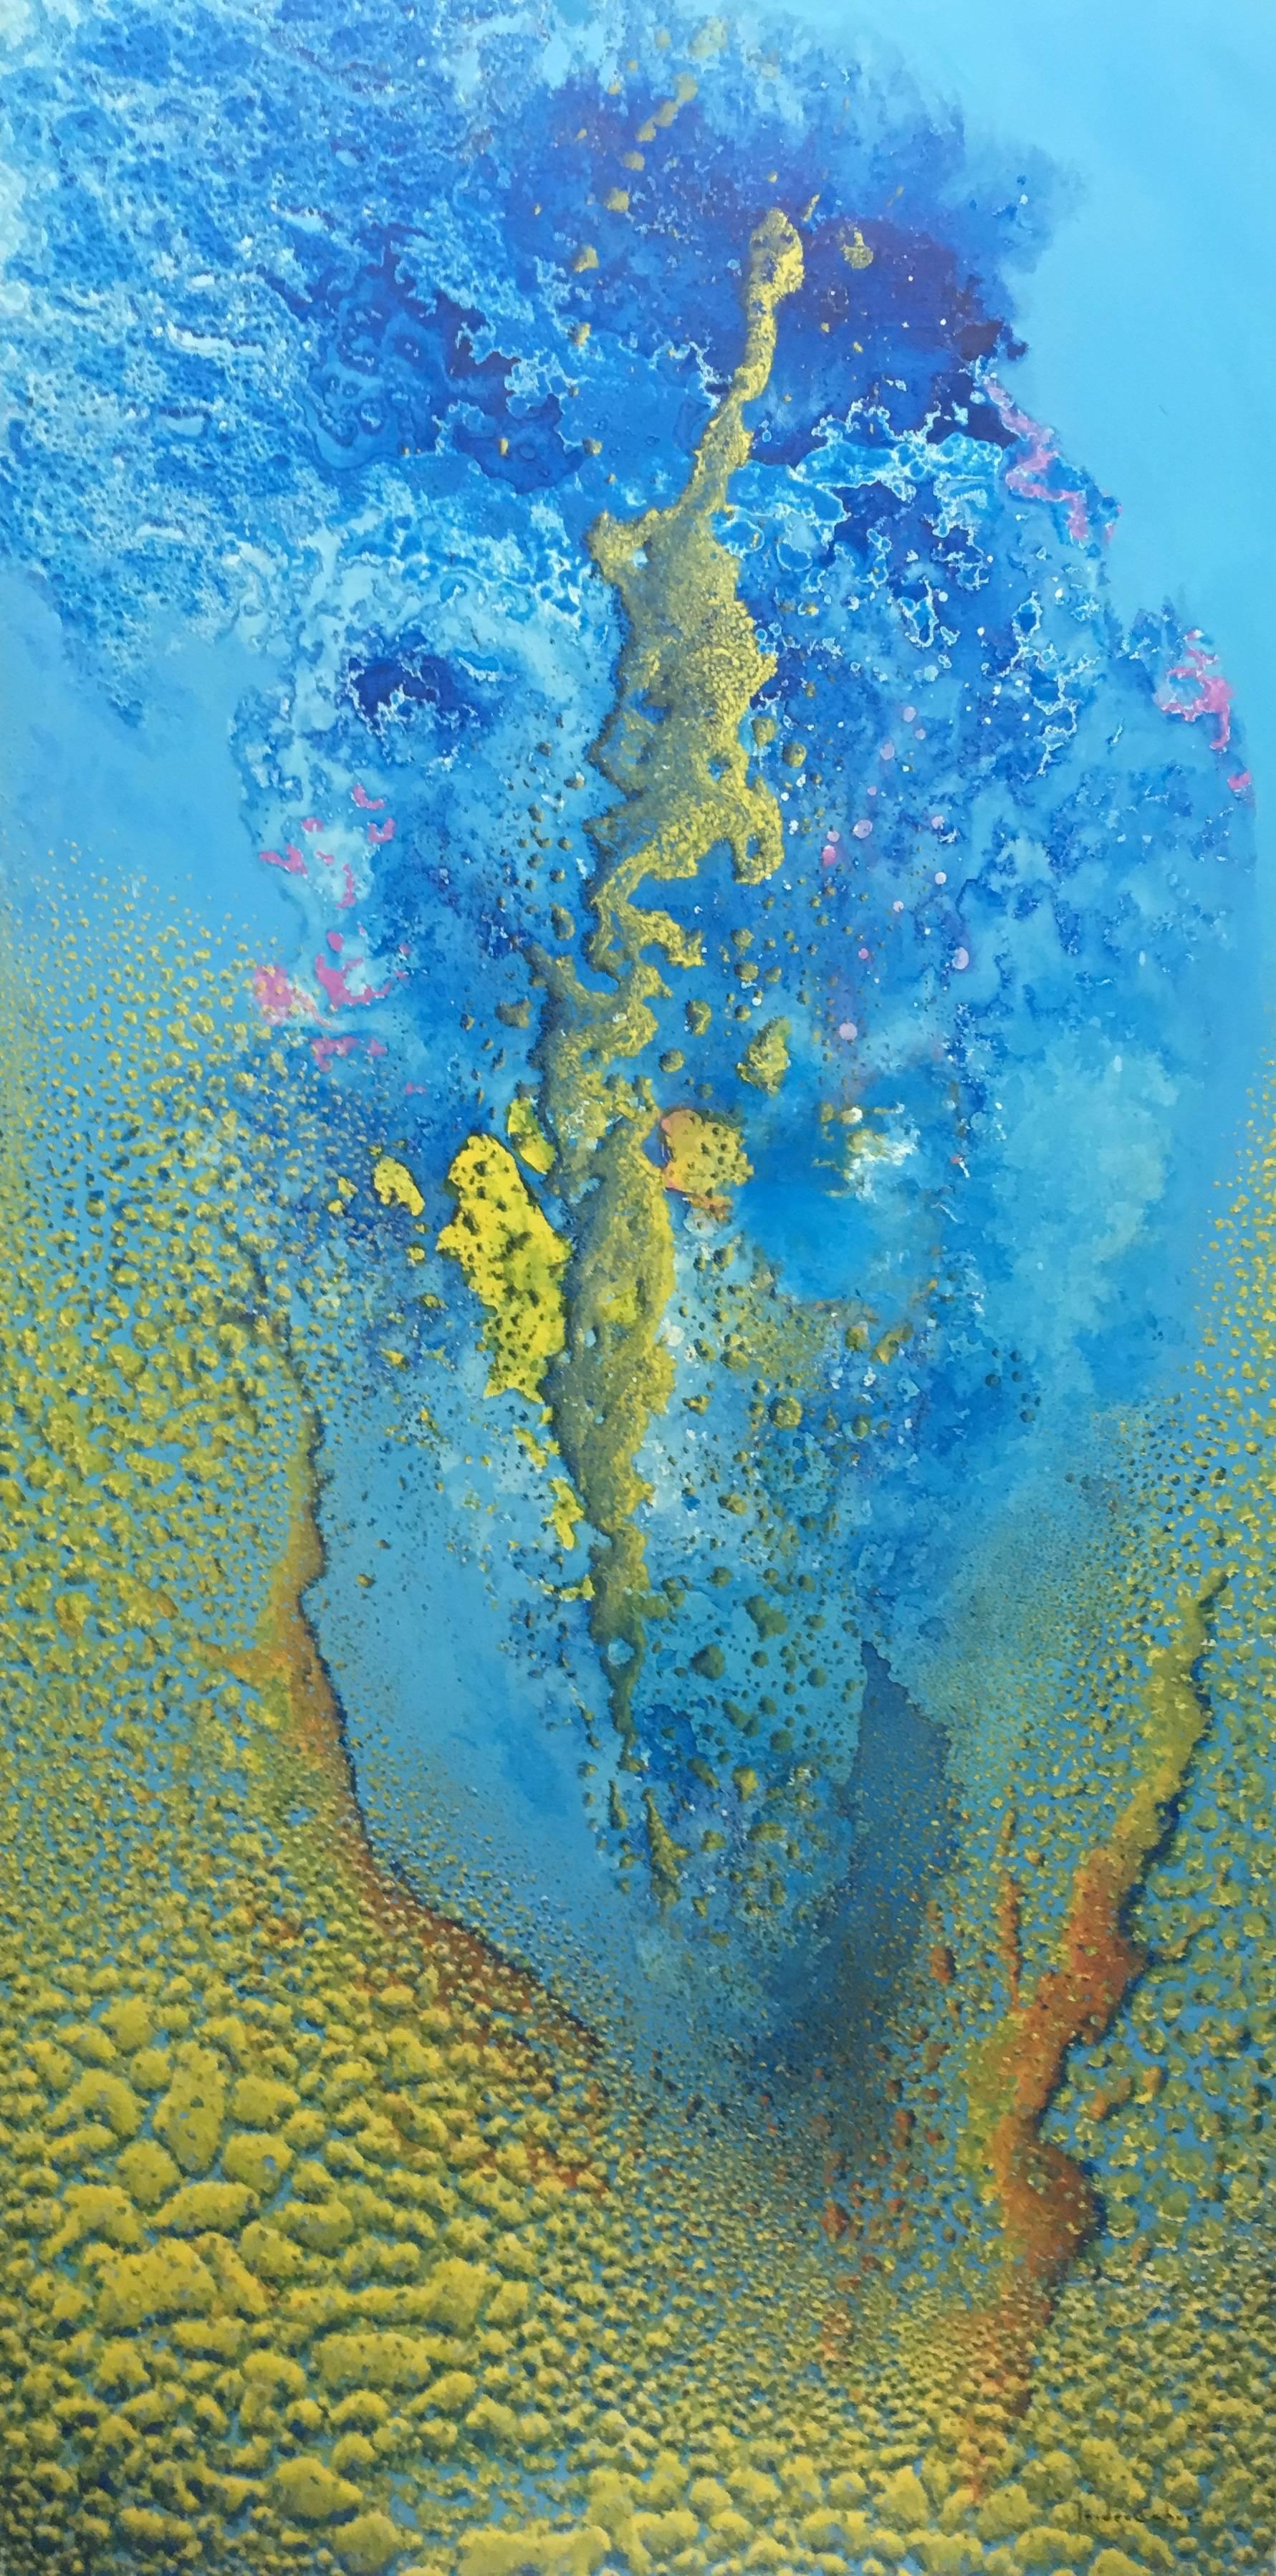 I. Cahue 20  bas de la mer, écailles, bleu jaune, abstrait - Painting de Isidro Cahue